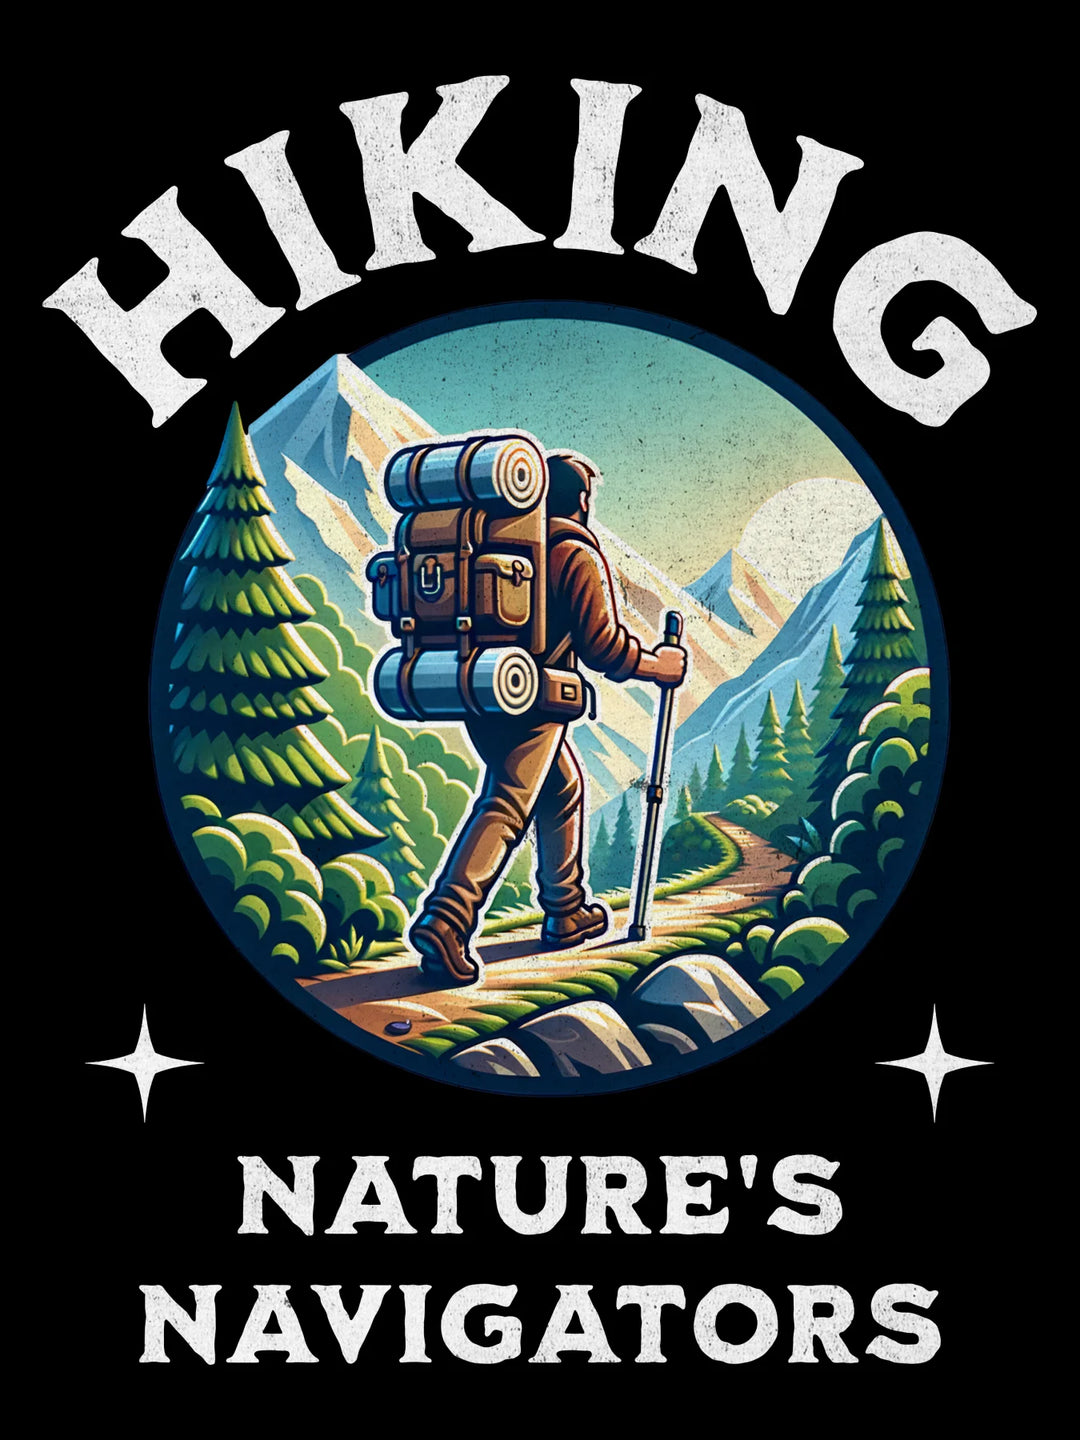 Hiking Nature's Navigators - Unisex T-Shirt